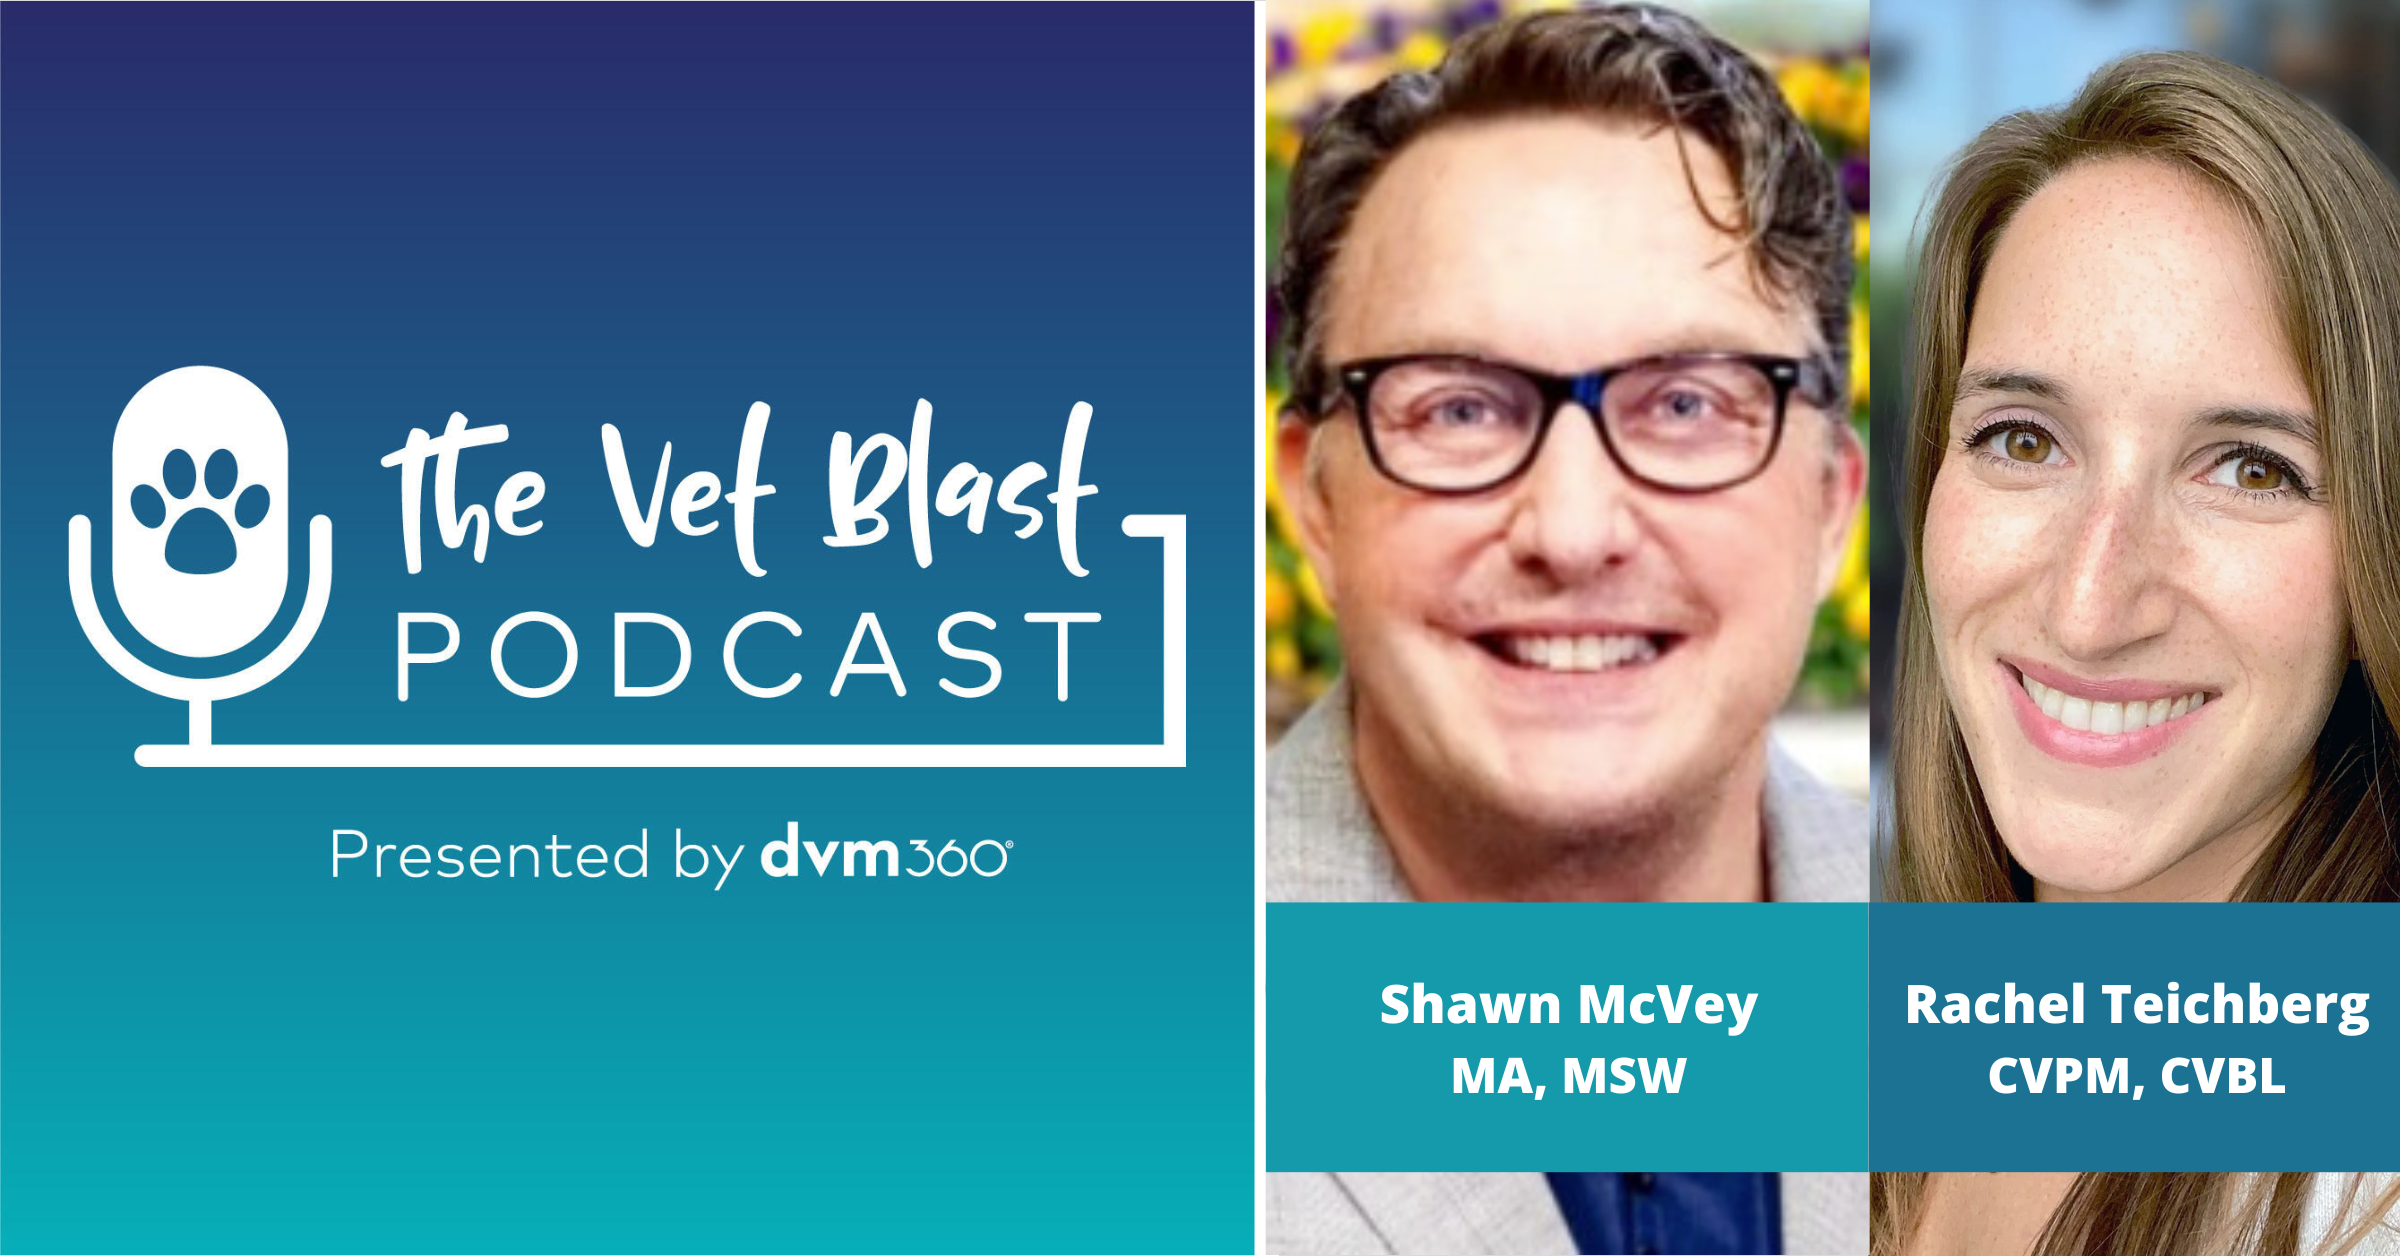 The Vet Blast Podcast with Shawn McVey and Rachel Teichberg